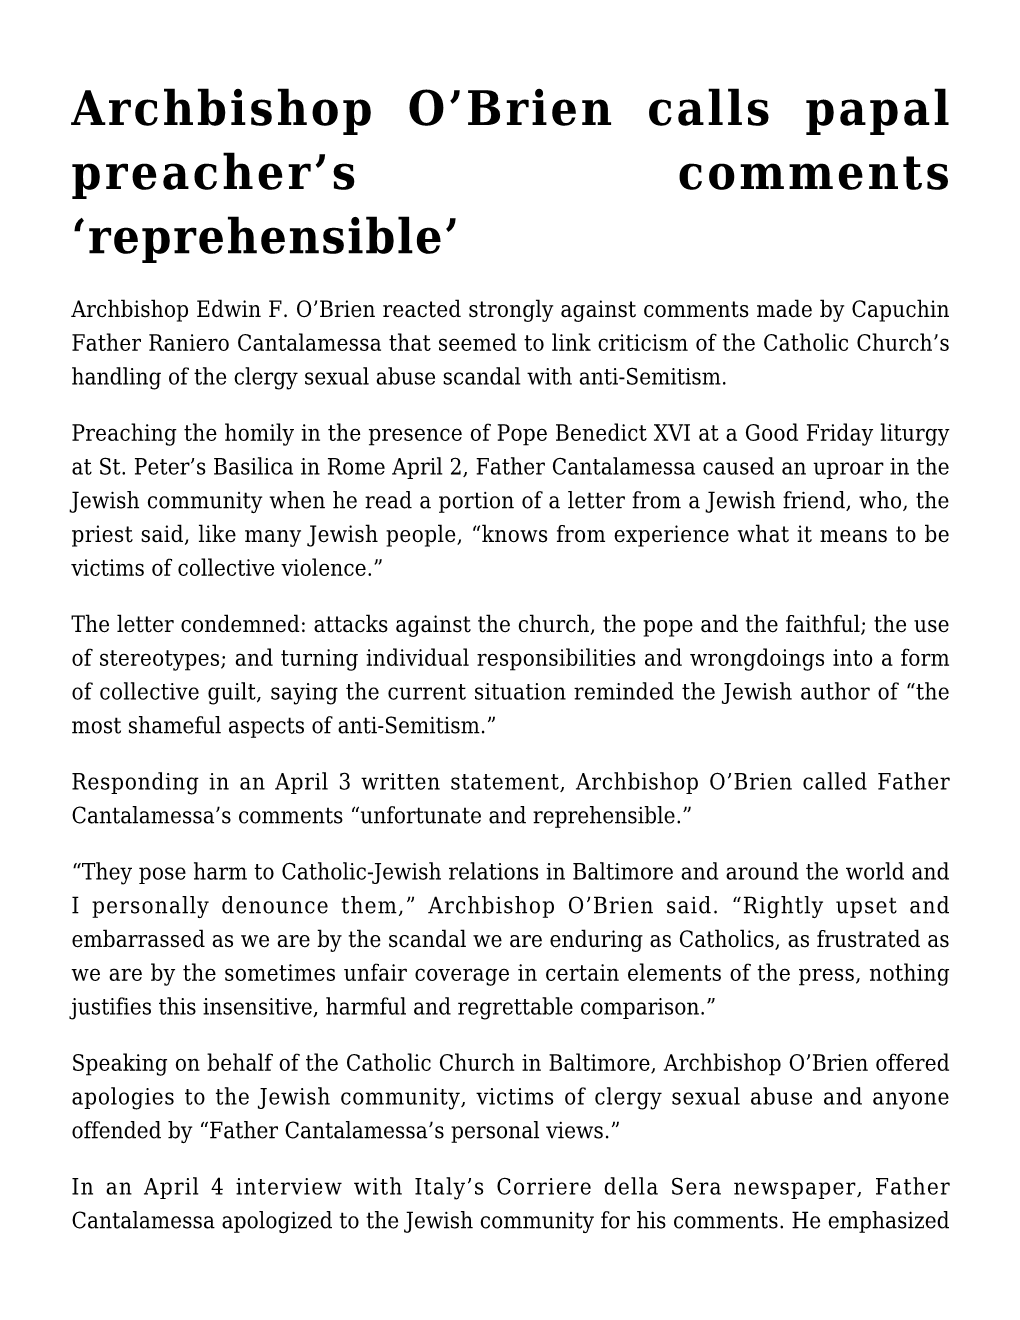 Archbishop O'brien Calls Papal Preacher's Comments 'Reprehensible'